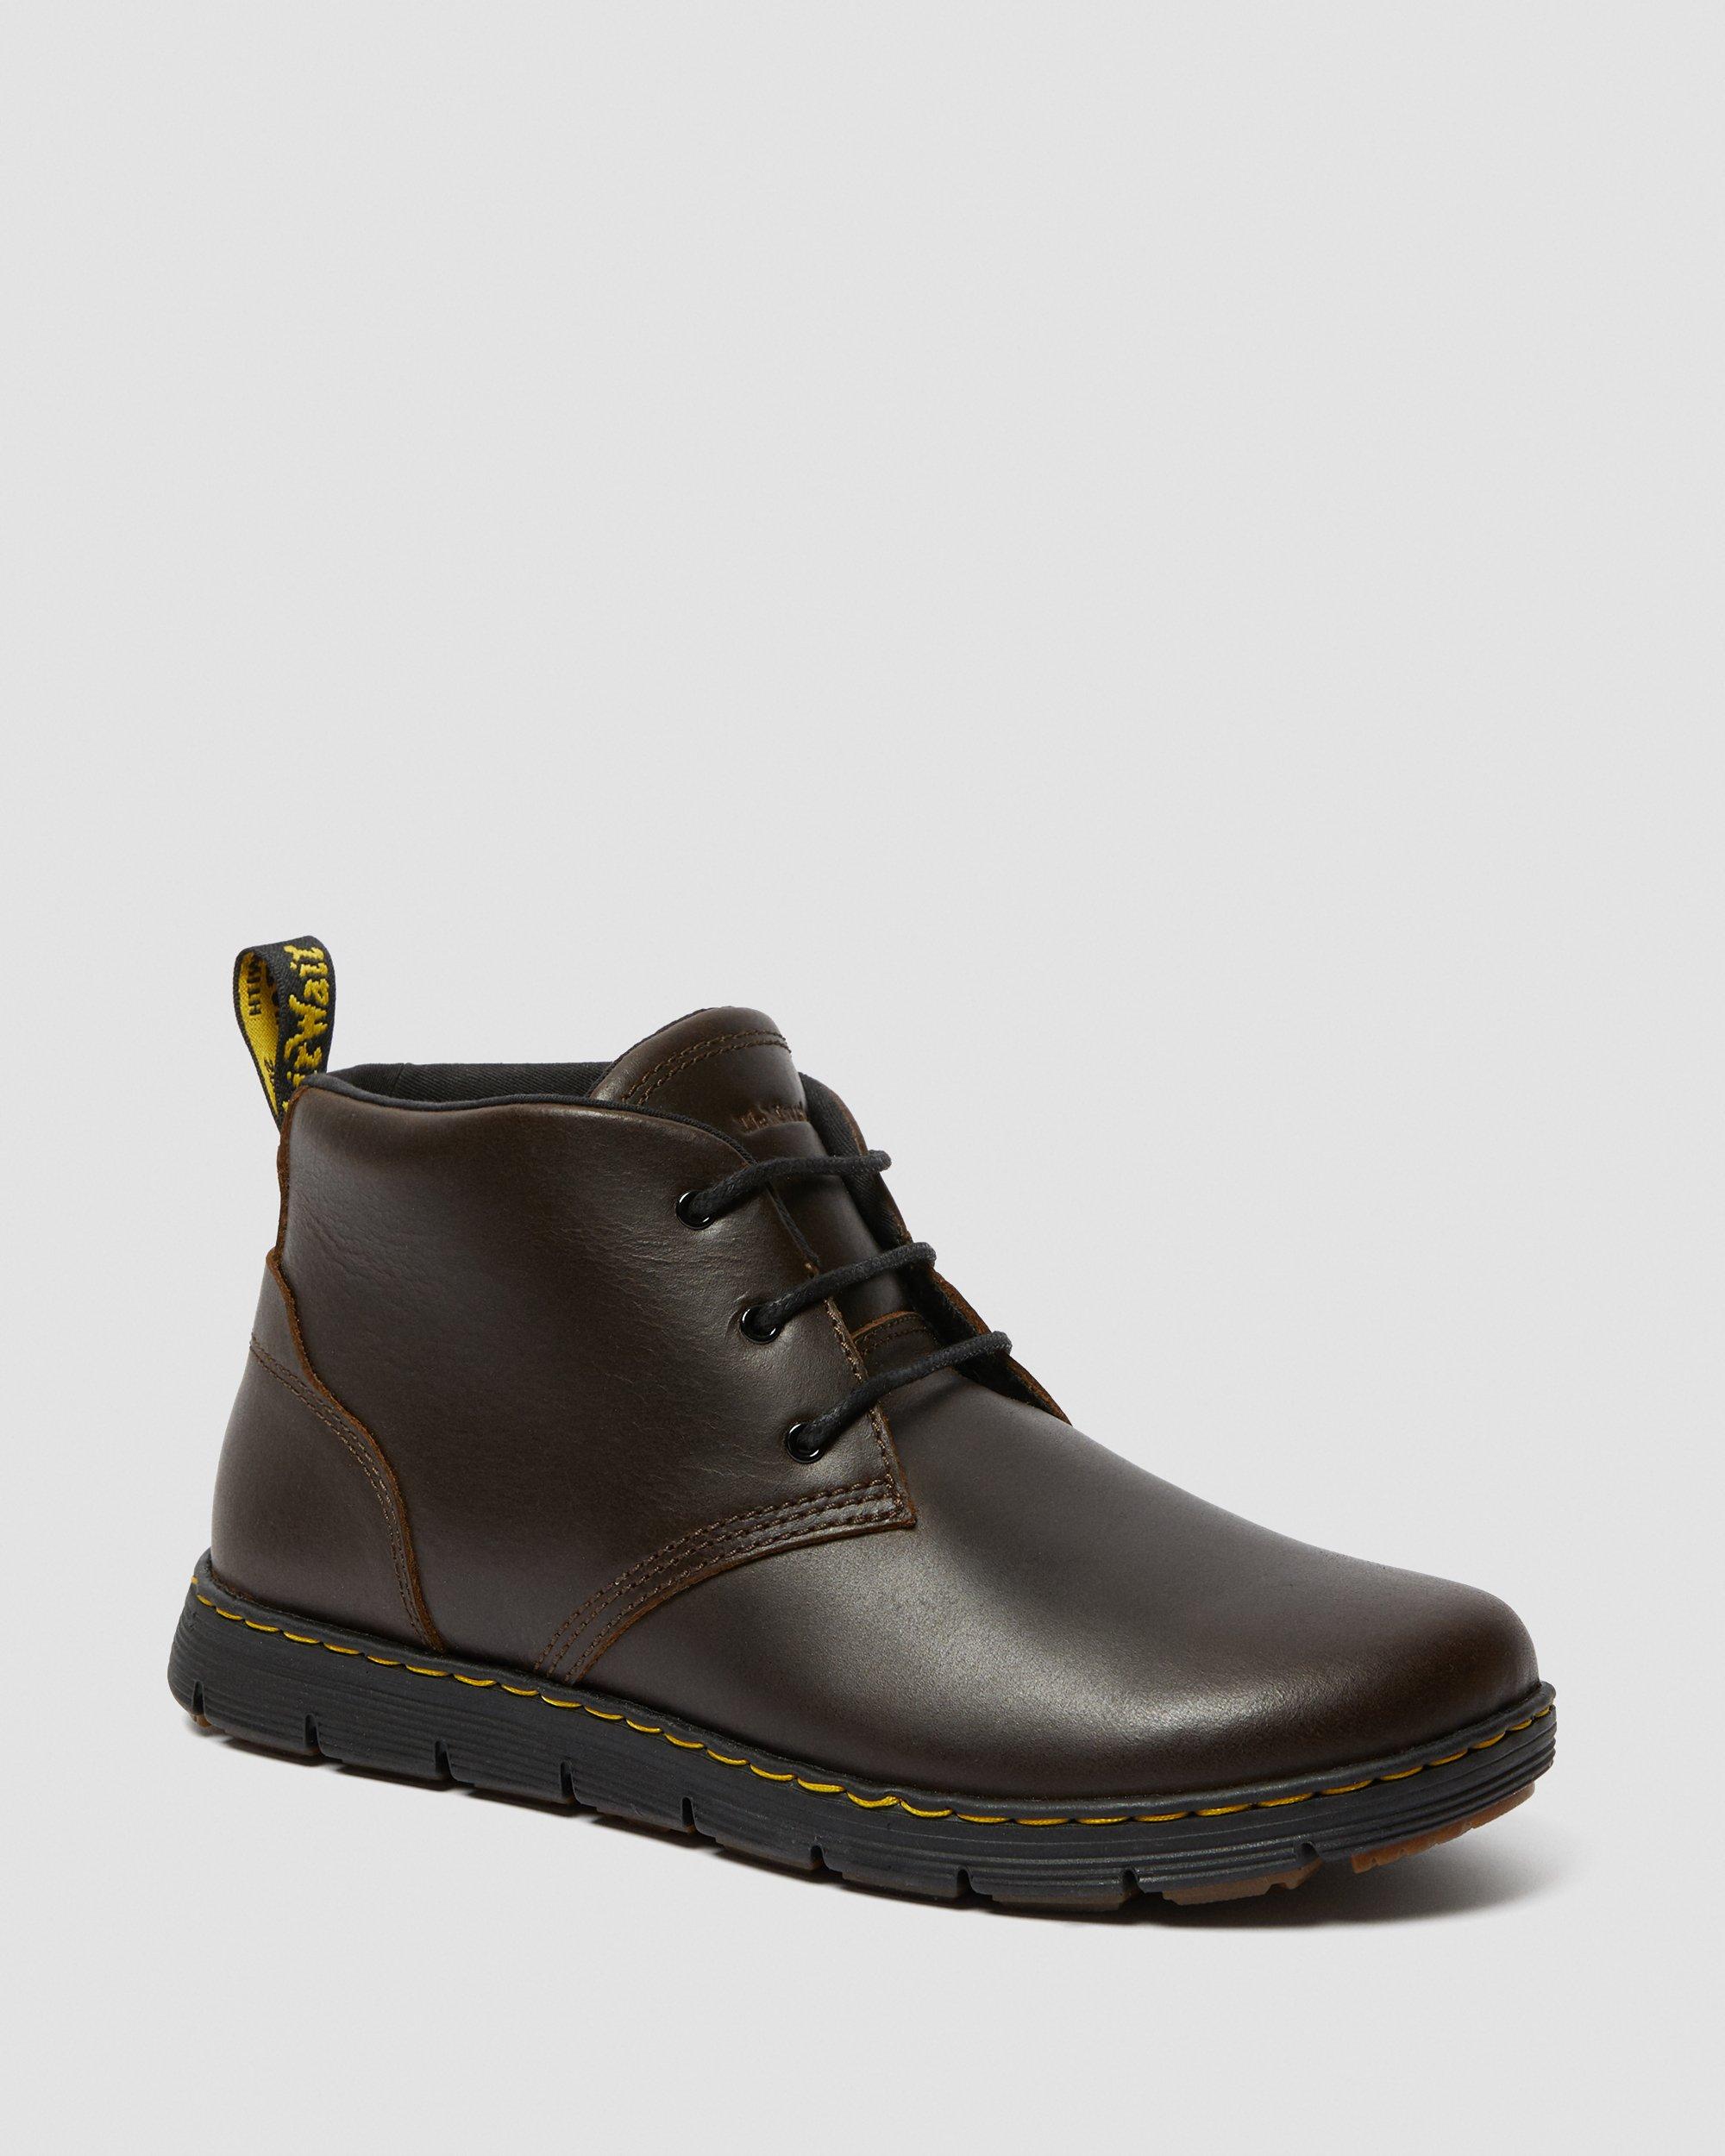 black leather chukka boots